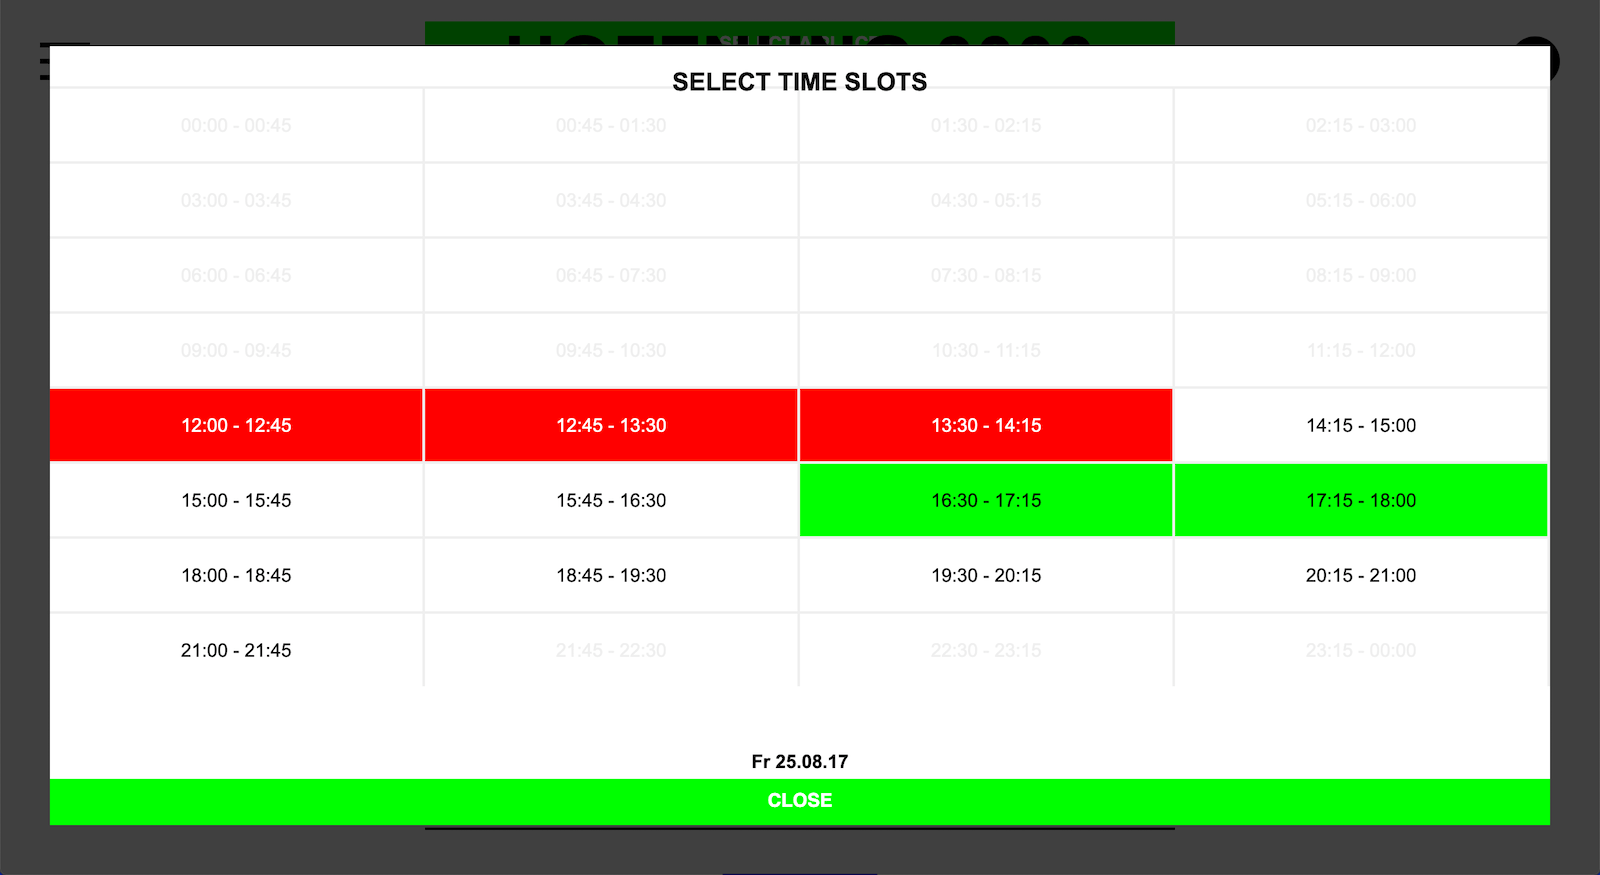 Select time slots